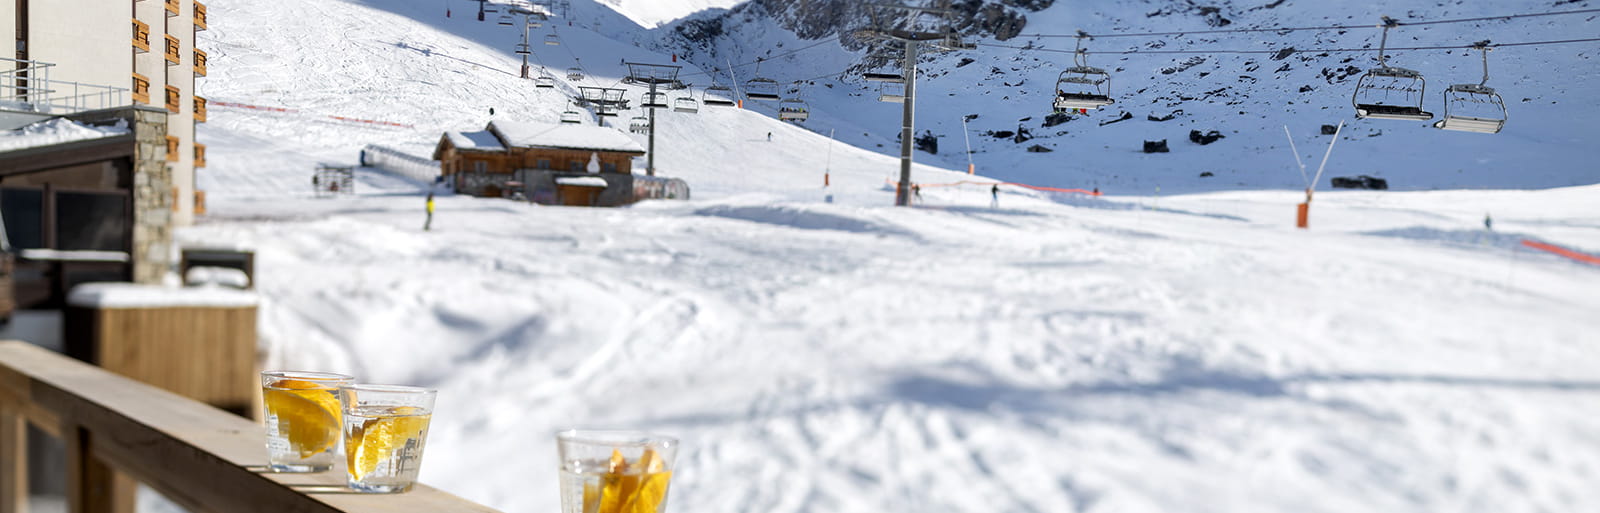 Ynycio Tignes Val Claret - View of the ski slope